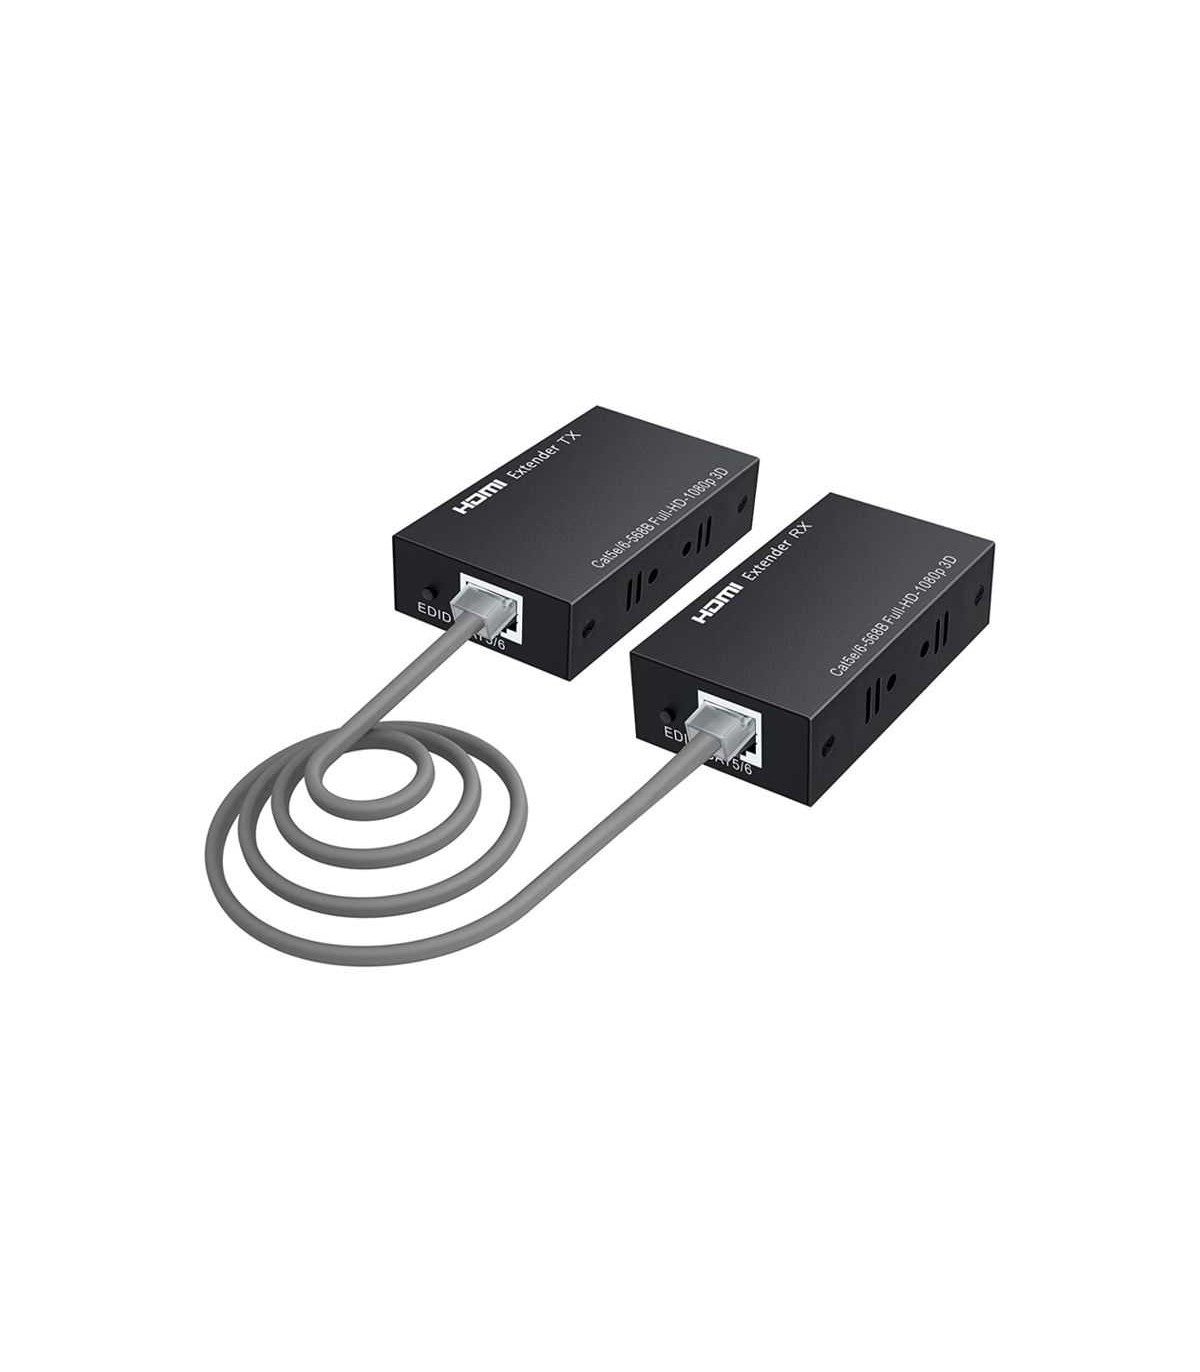 N3ET40E EXTENSOR HDMI EXTENDER DE HASTA 60M SOBRE CABLE UTP CAT5E / CAT6 -  Extensores de video - Camaras de Seguridad Y Control de Acceso